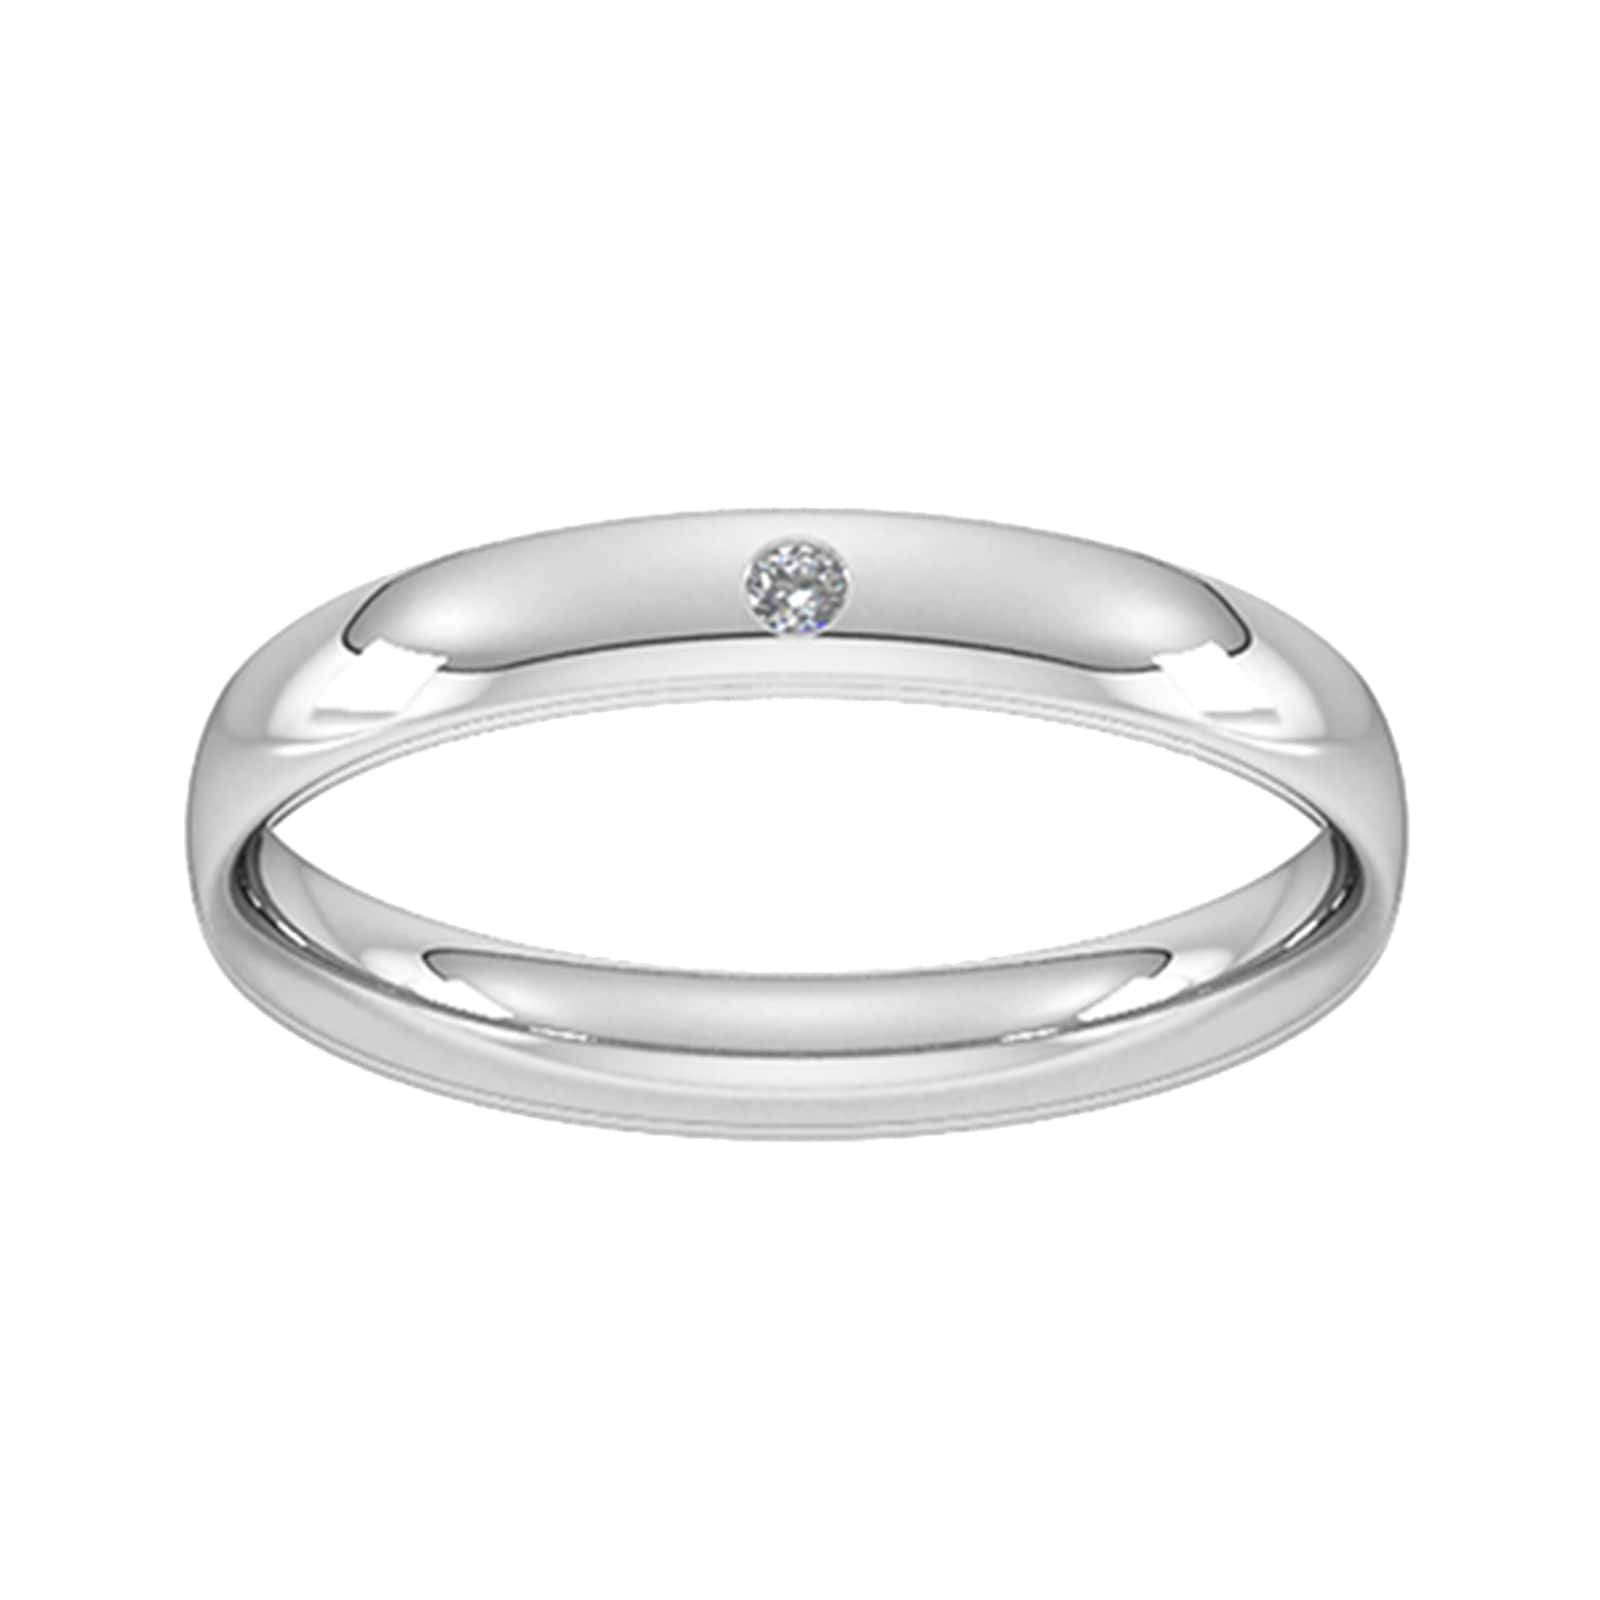 3mm Brilliant Cut Rub Over Diamond Set Wedding Ring In 18 Carat White Gold - Ring Size P